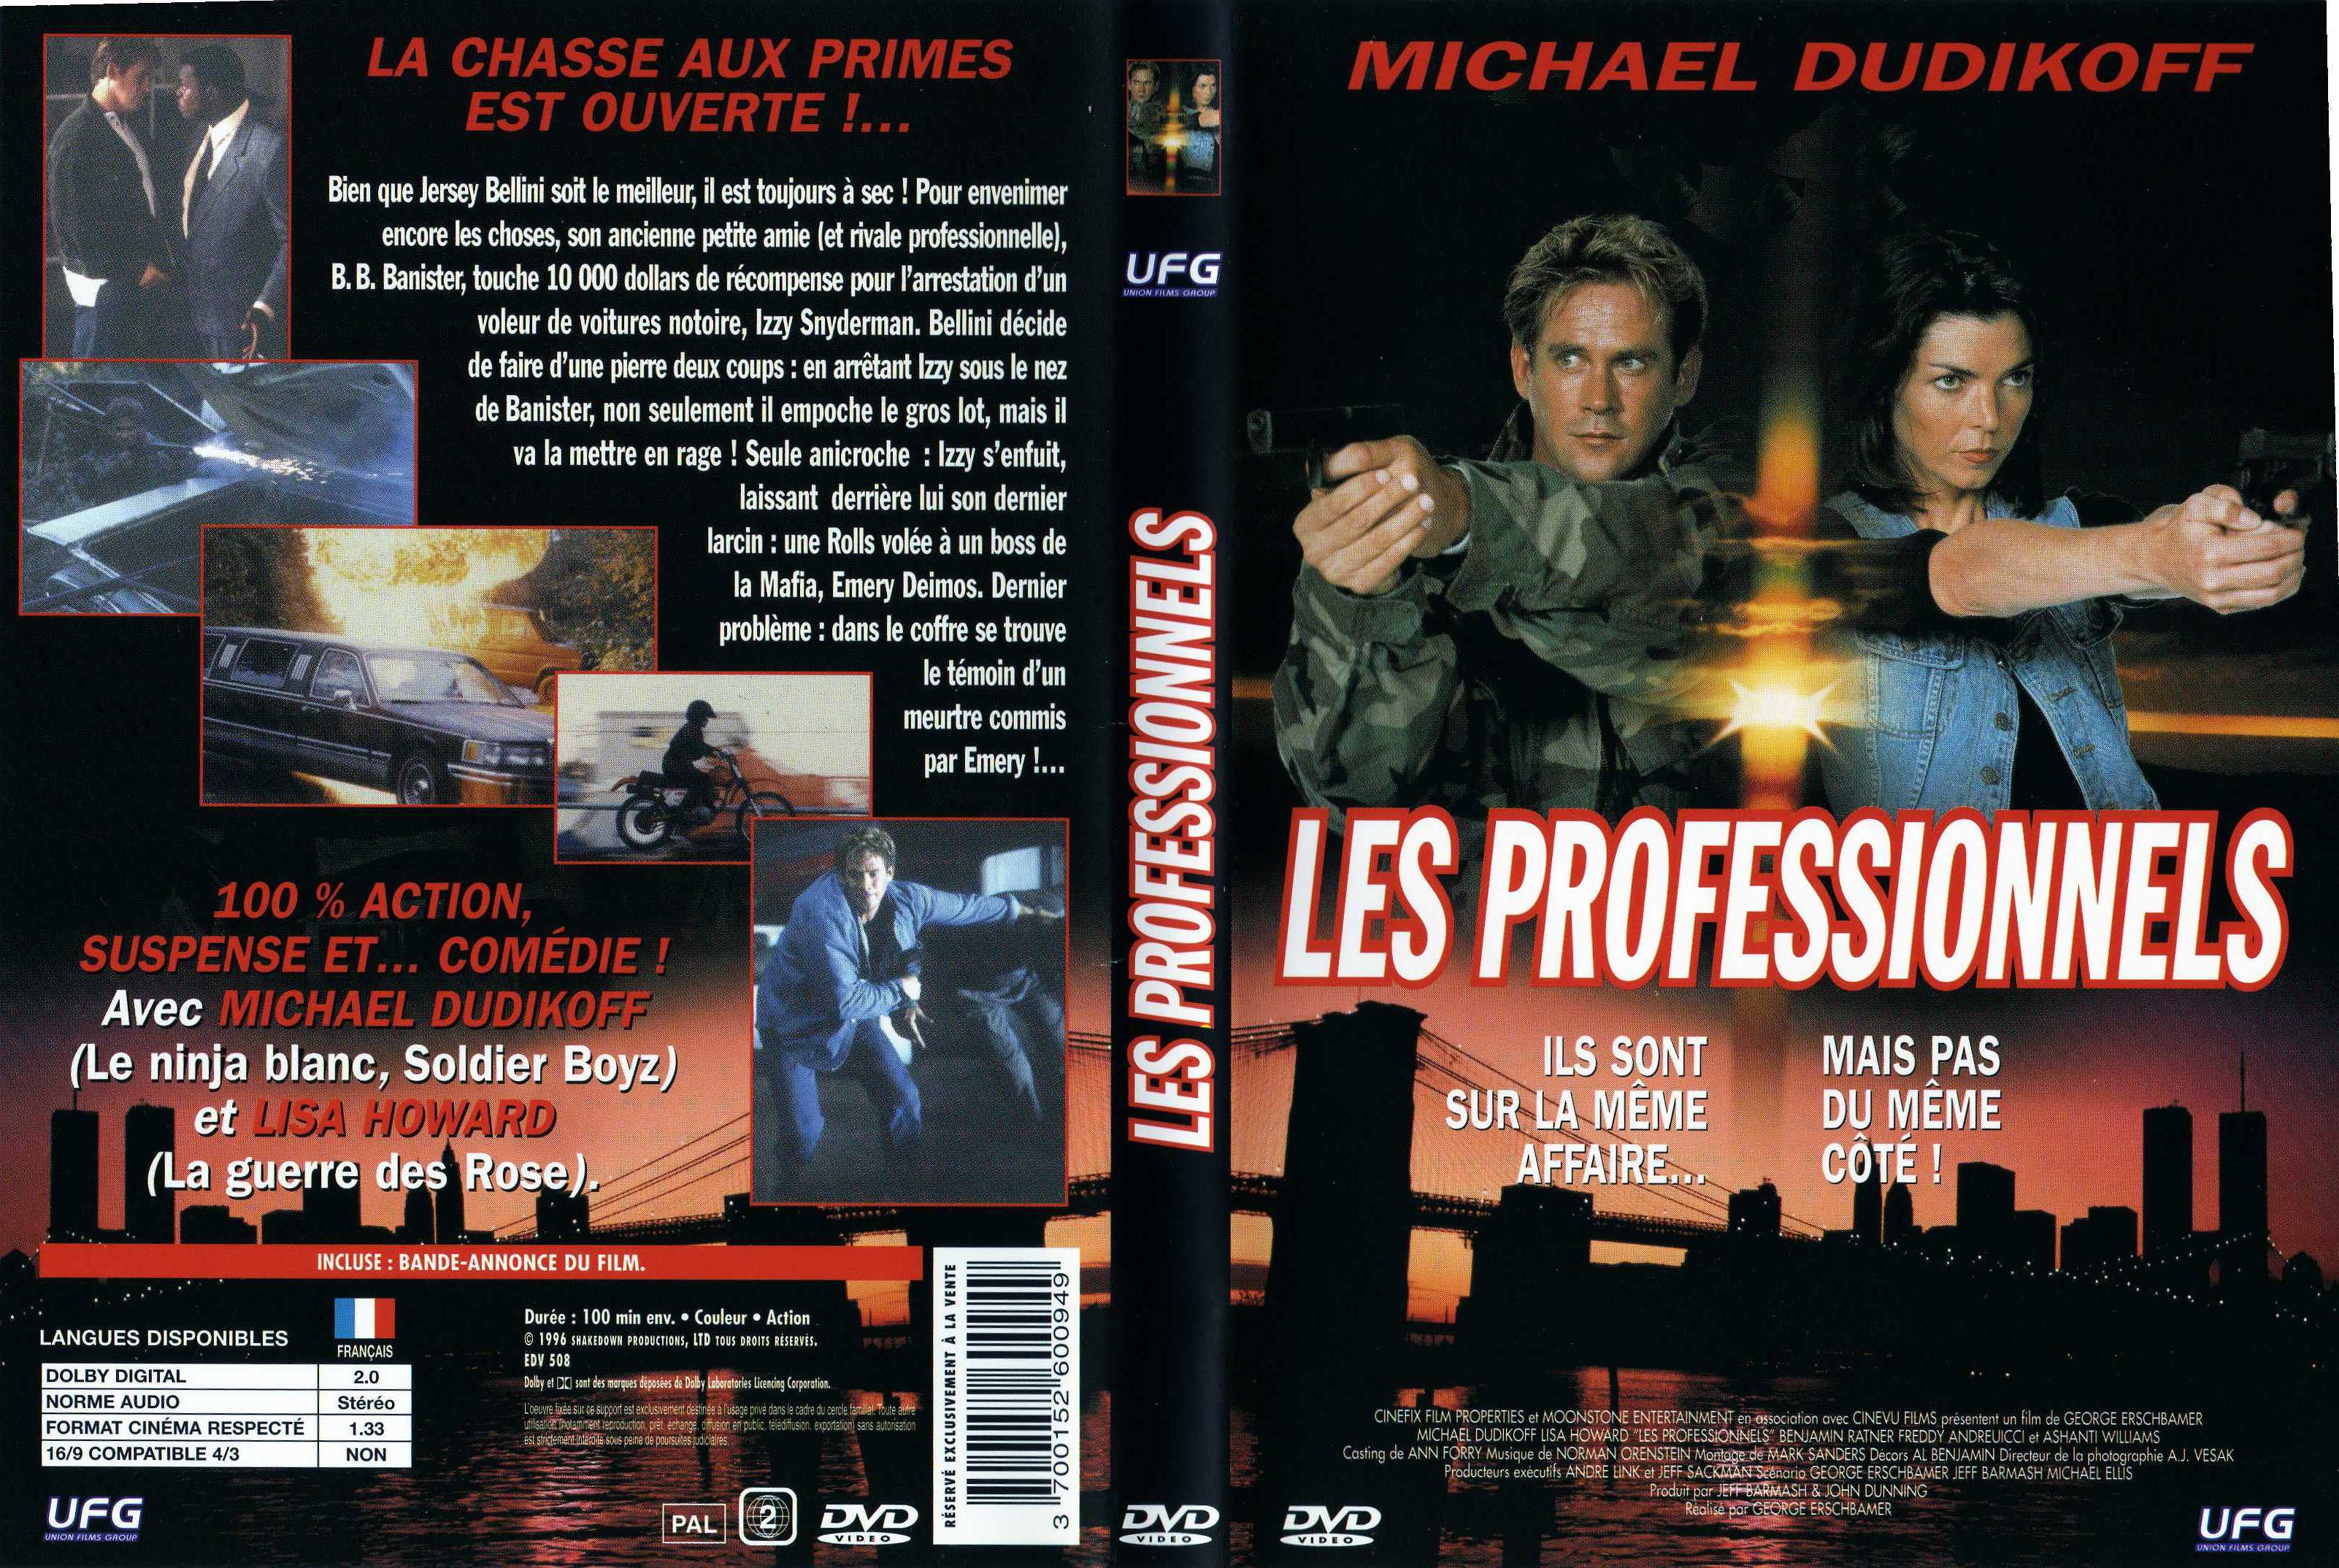 Jaquette DVD Les professionnels (Dudikoff)